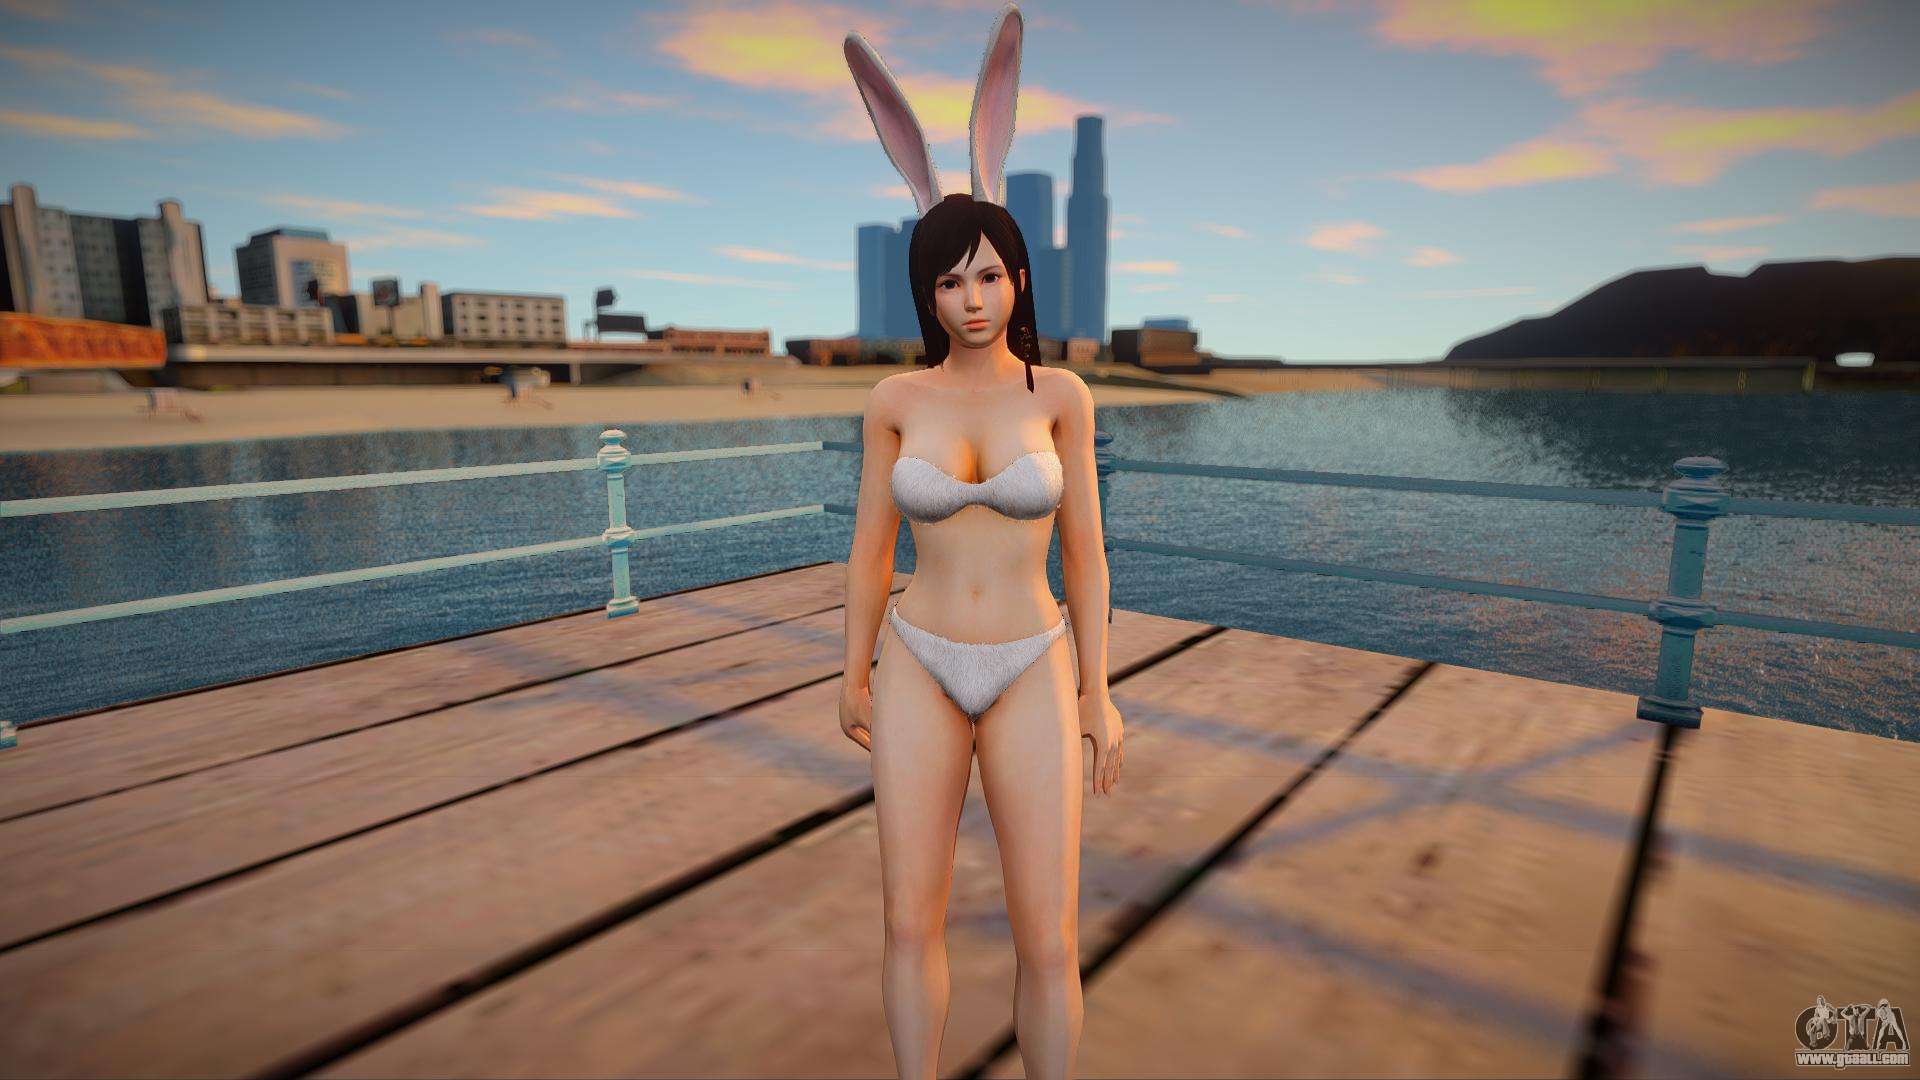 Bikini rabbit review